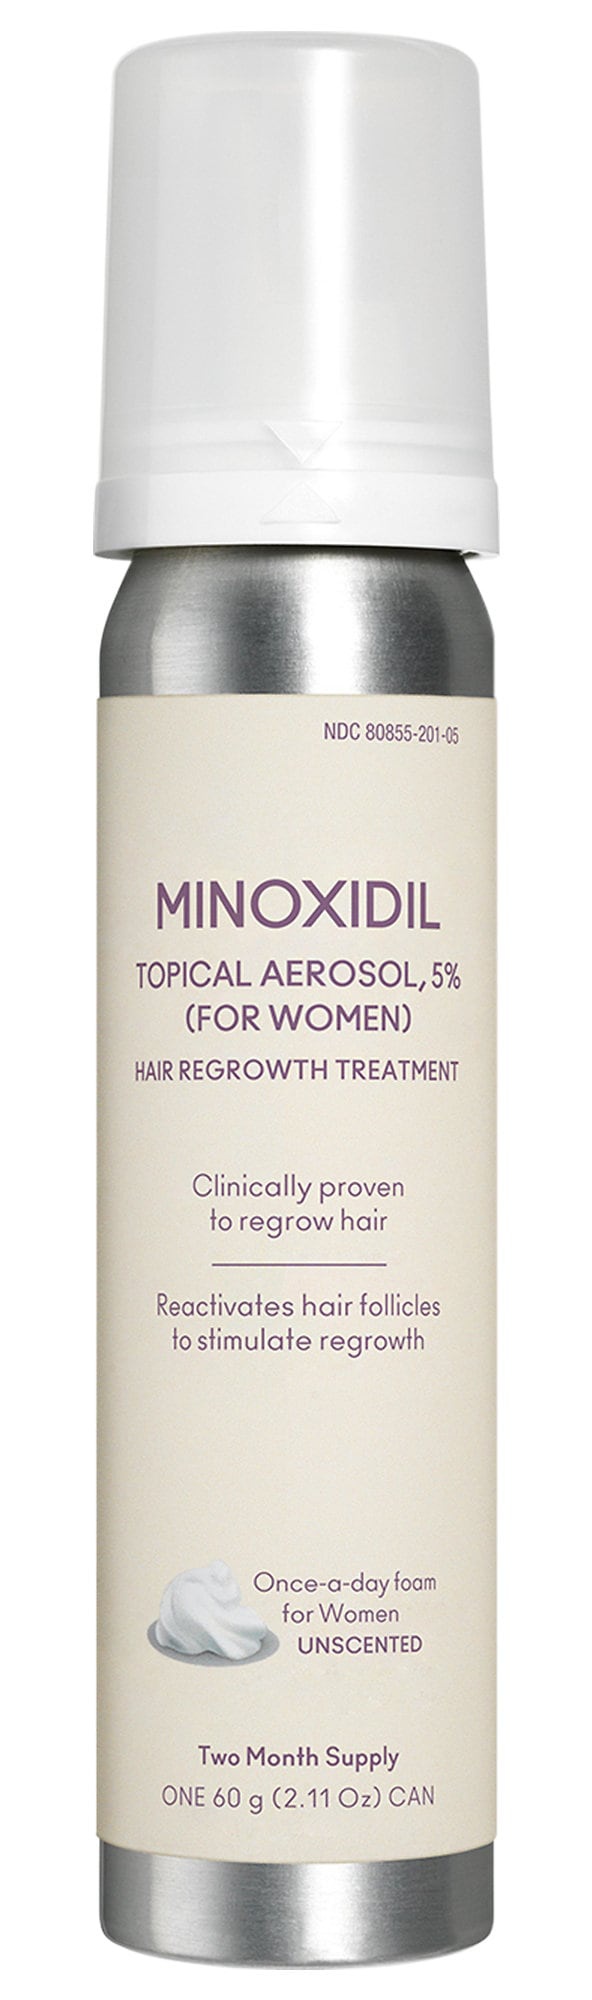 virtue Flourish Minoxidil Topical Aerosol 5% Hair Regrowth Treatment For Women